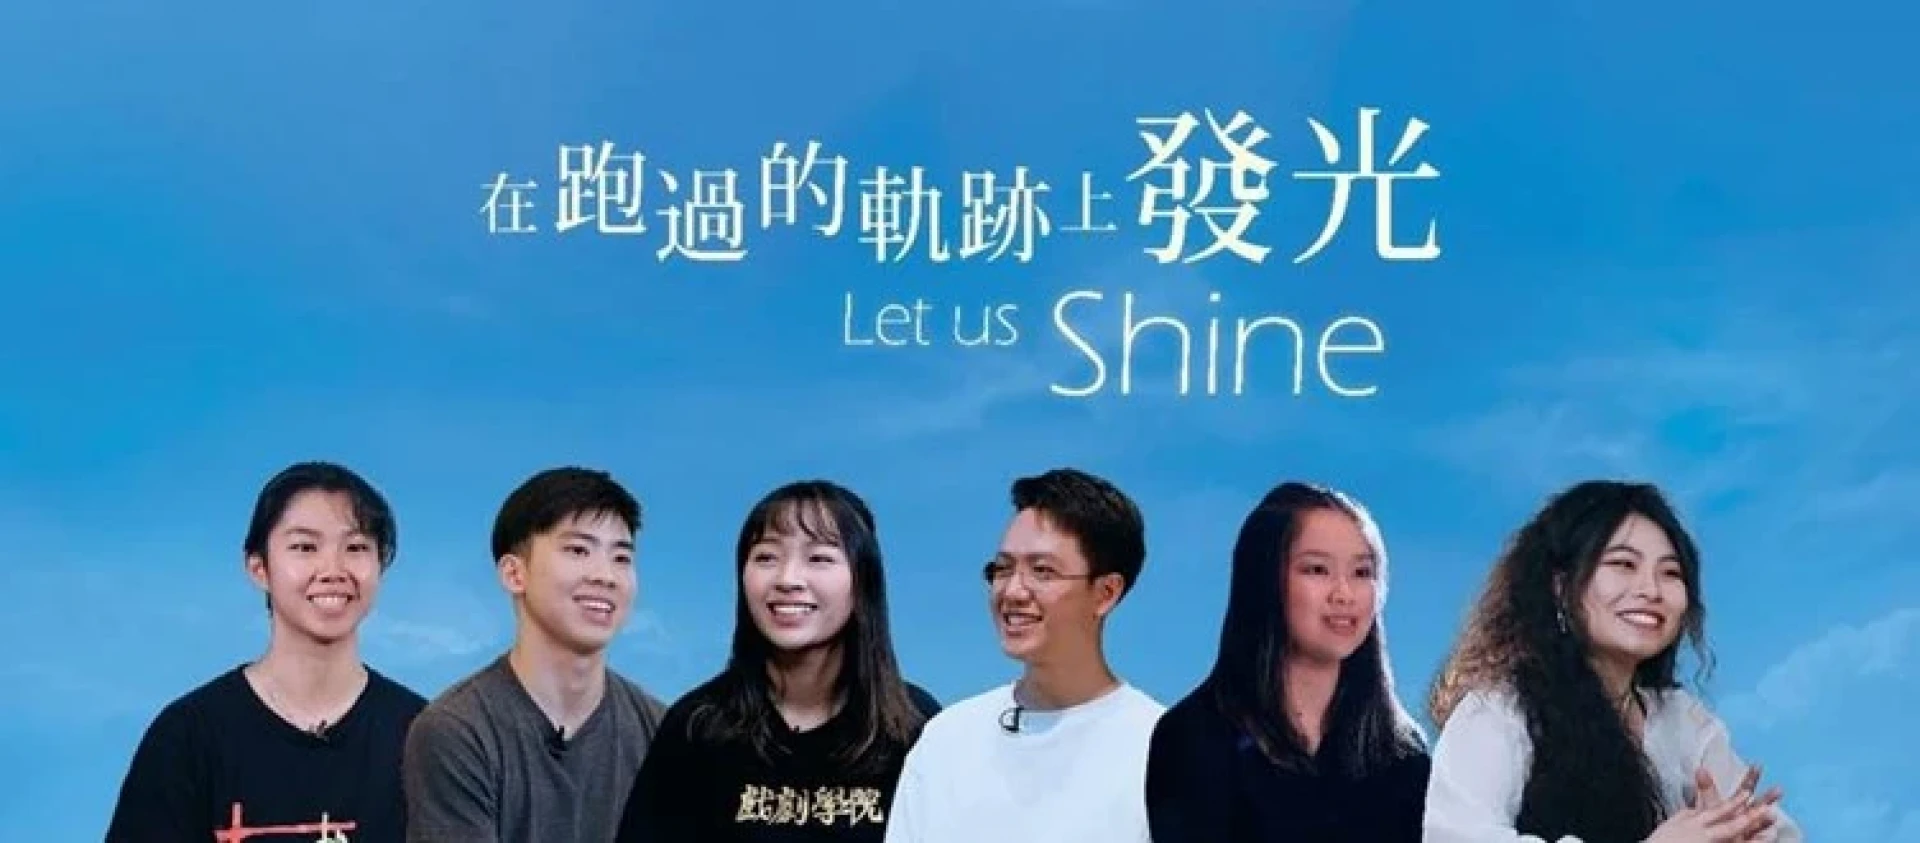 Let Us Shine documentary series 